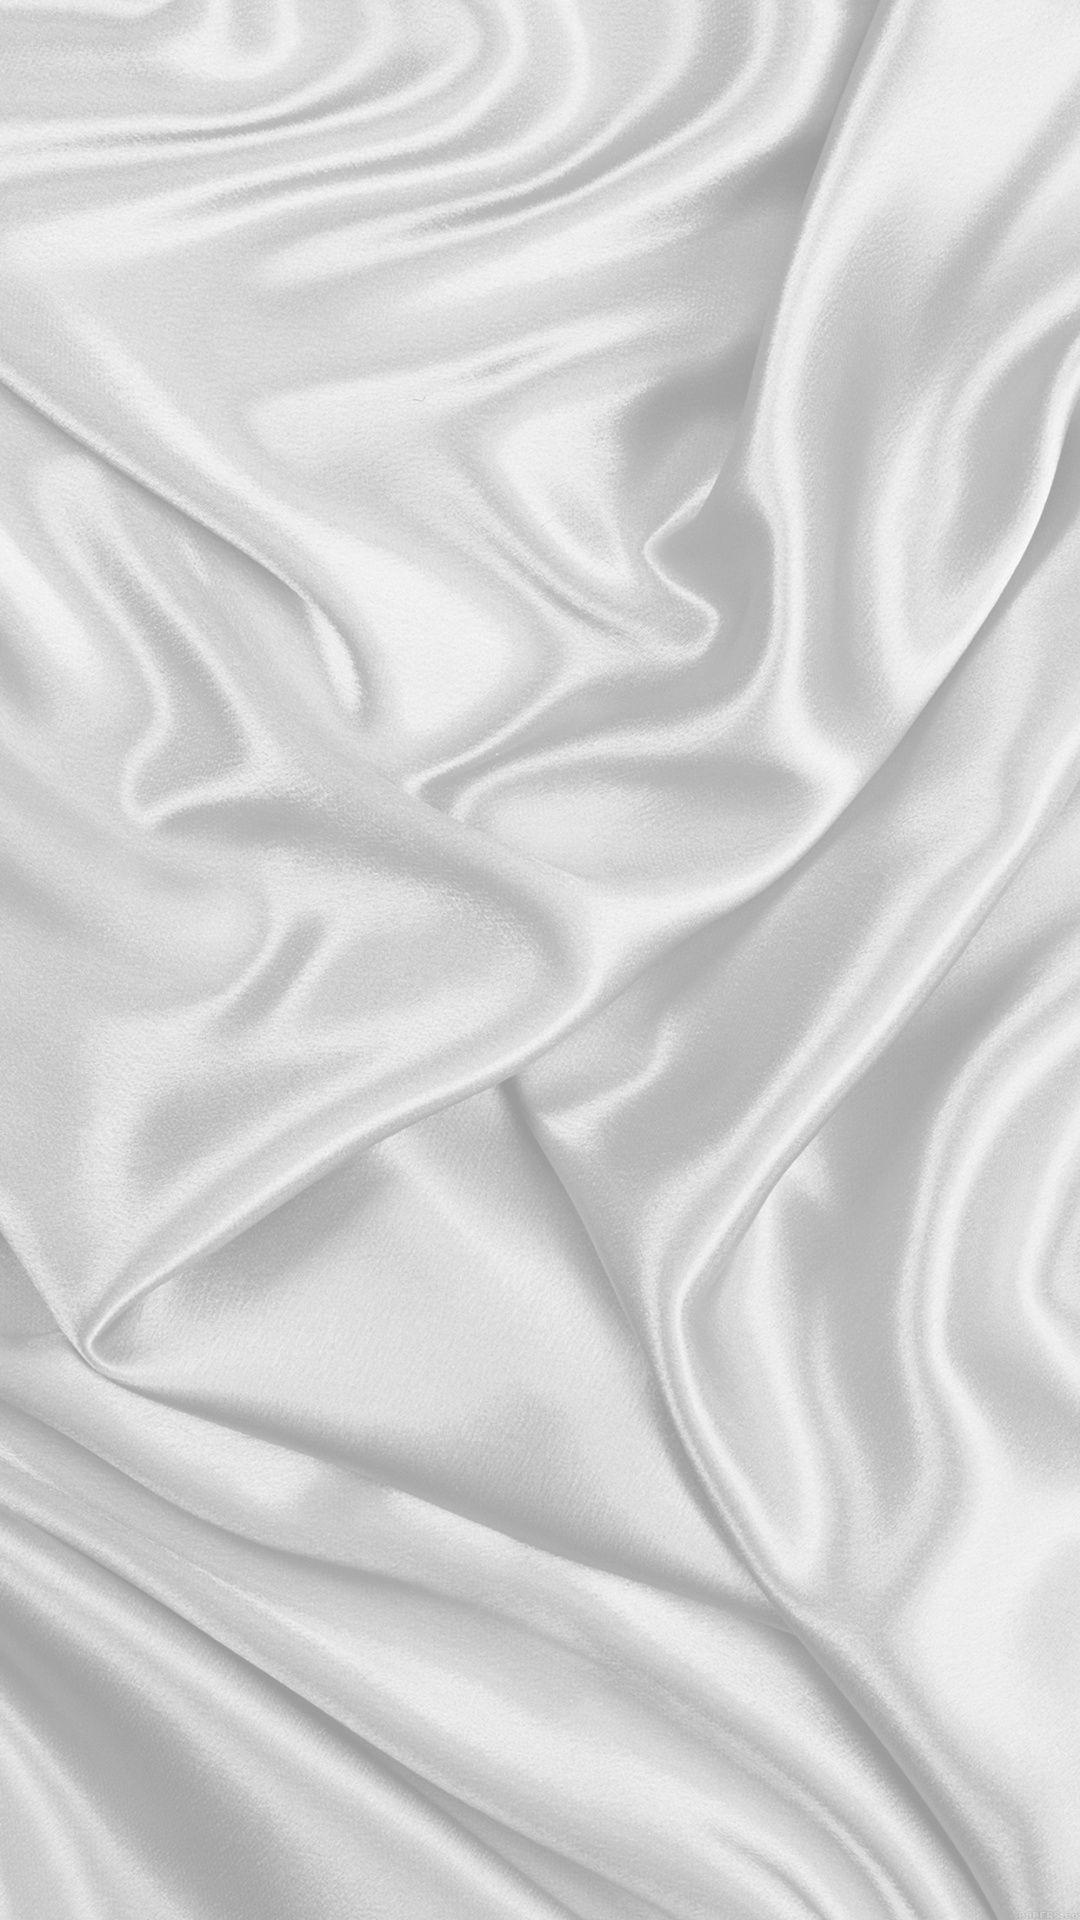 White Soft Silk Fabric iPhone HD Wallpaper / iPod Wallpaper HD